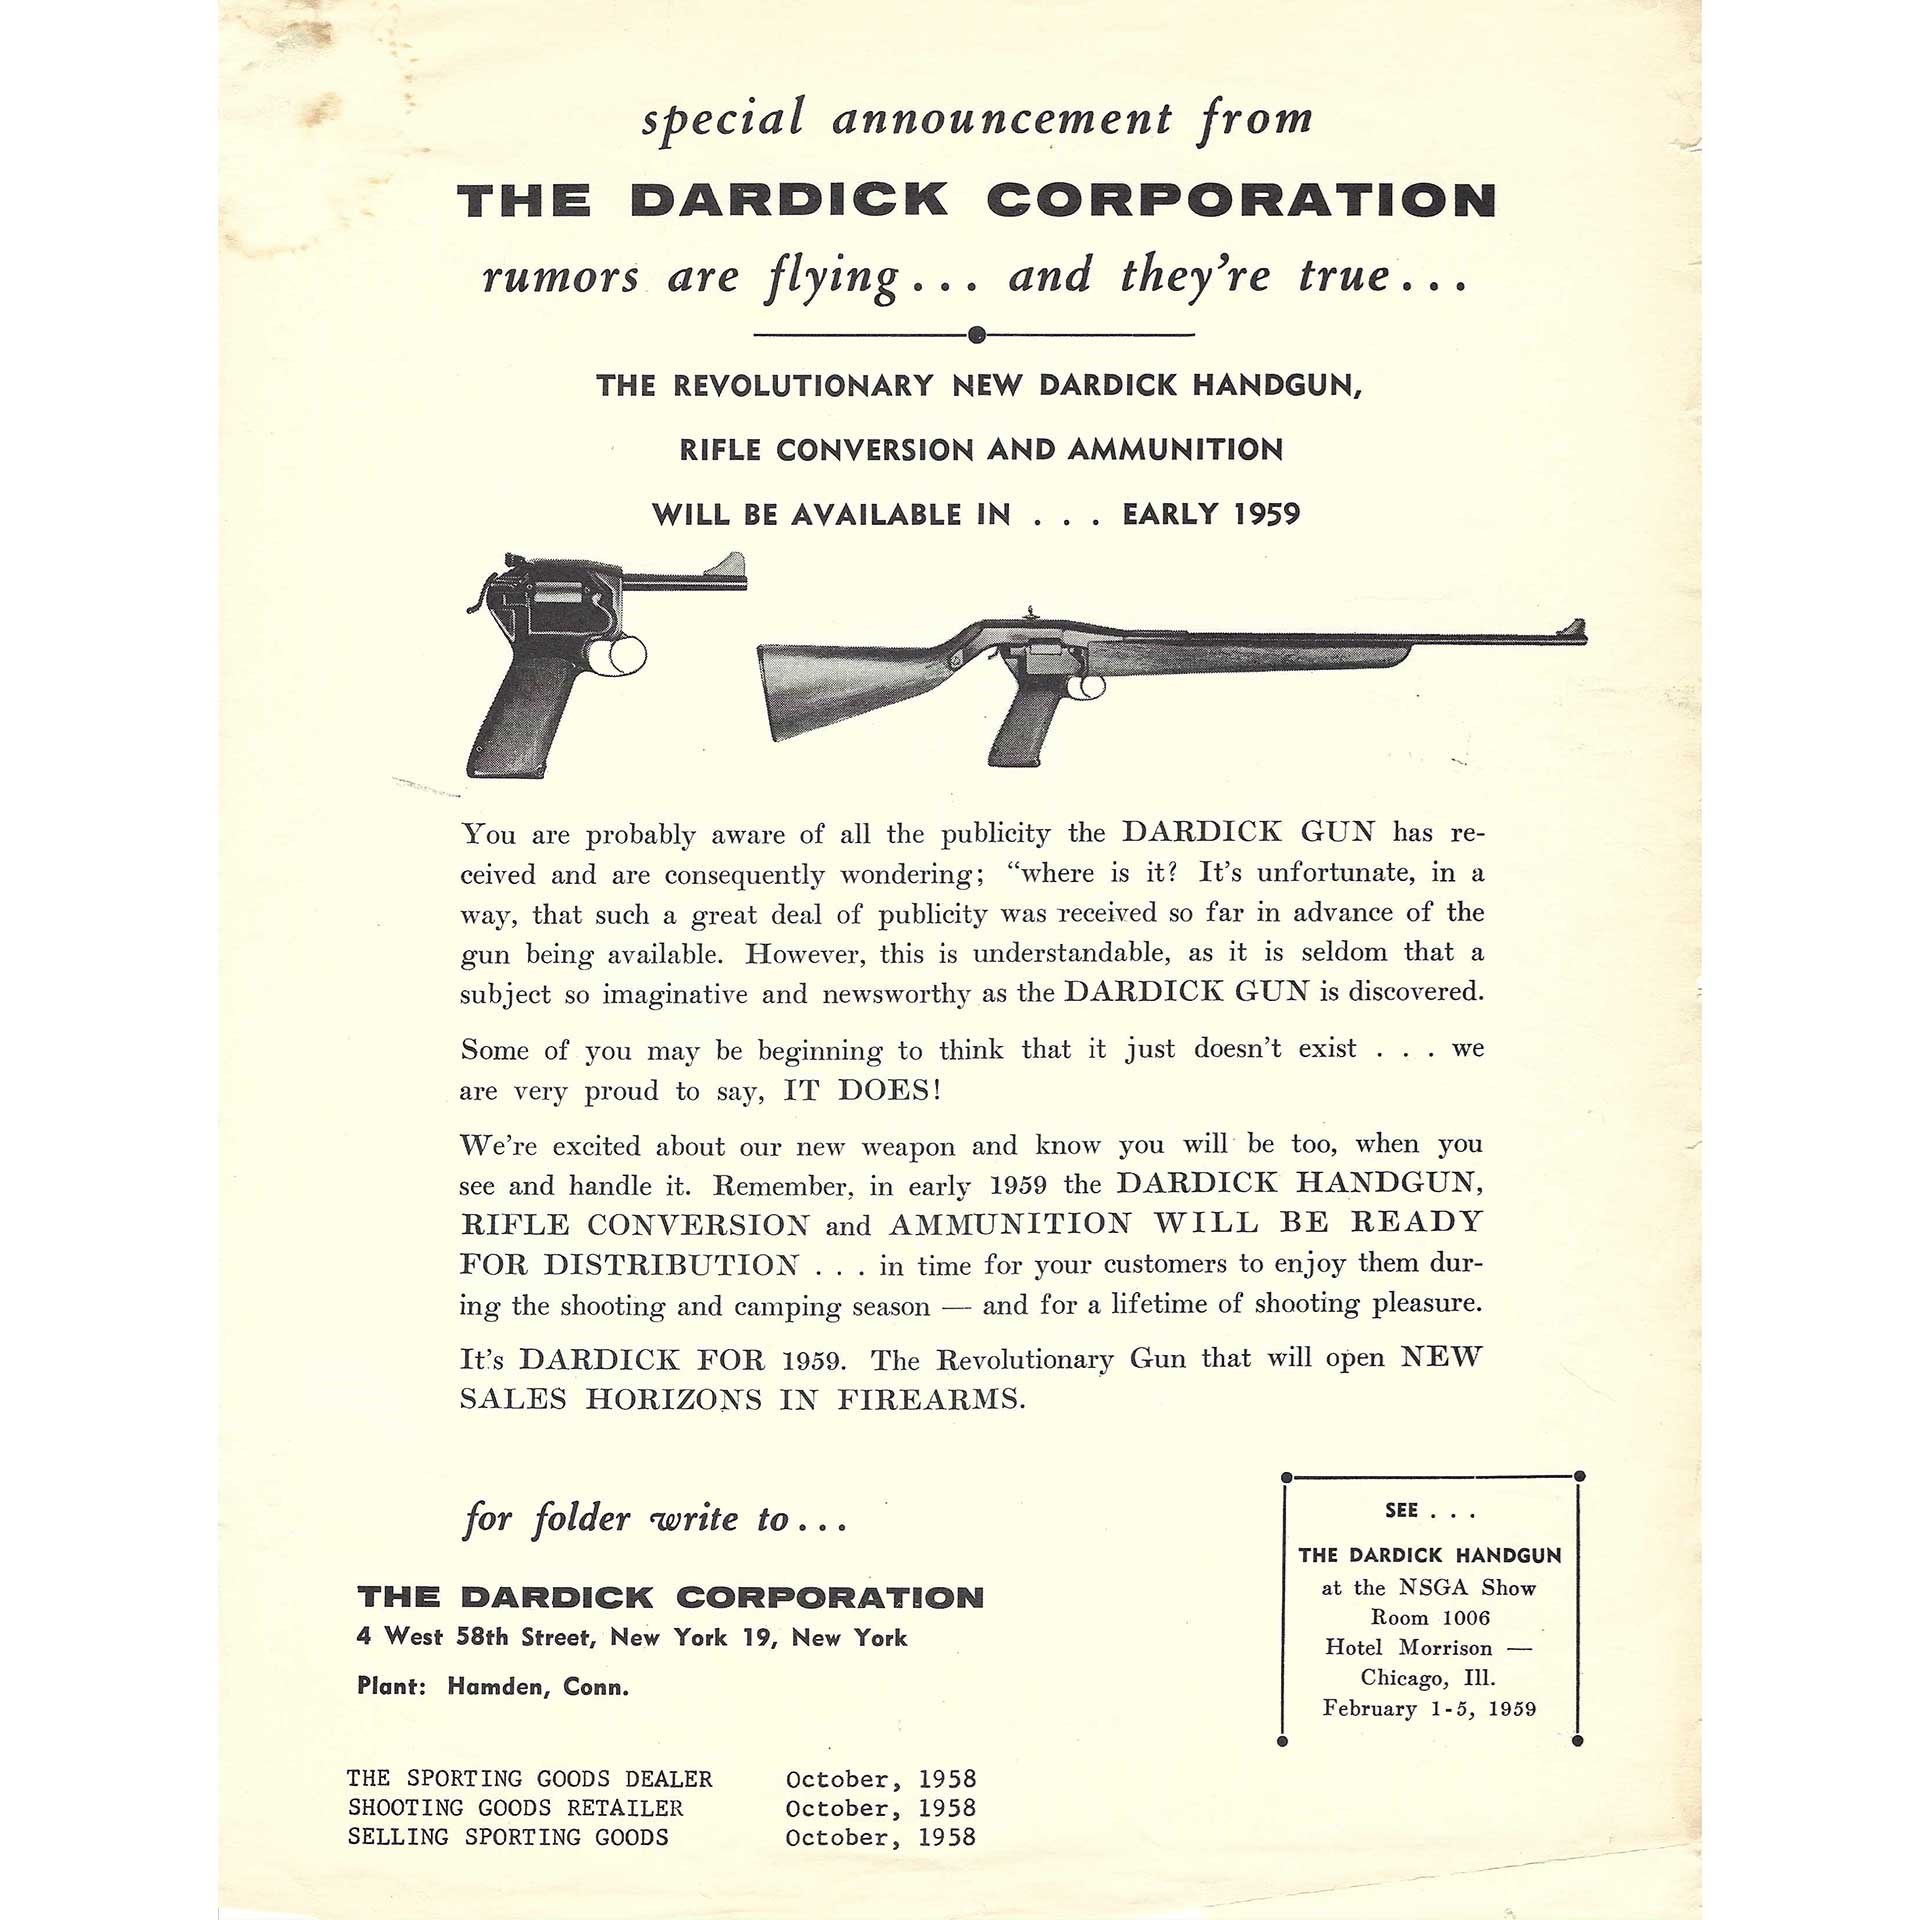 A Dardick Corporation poster advertising its handgun.